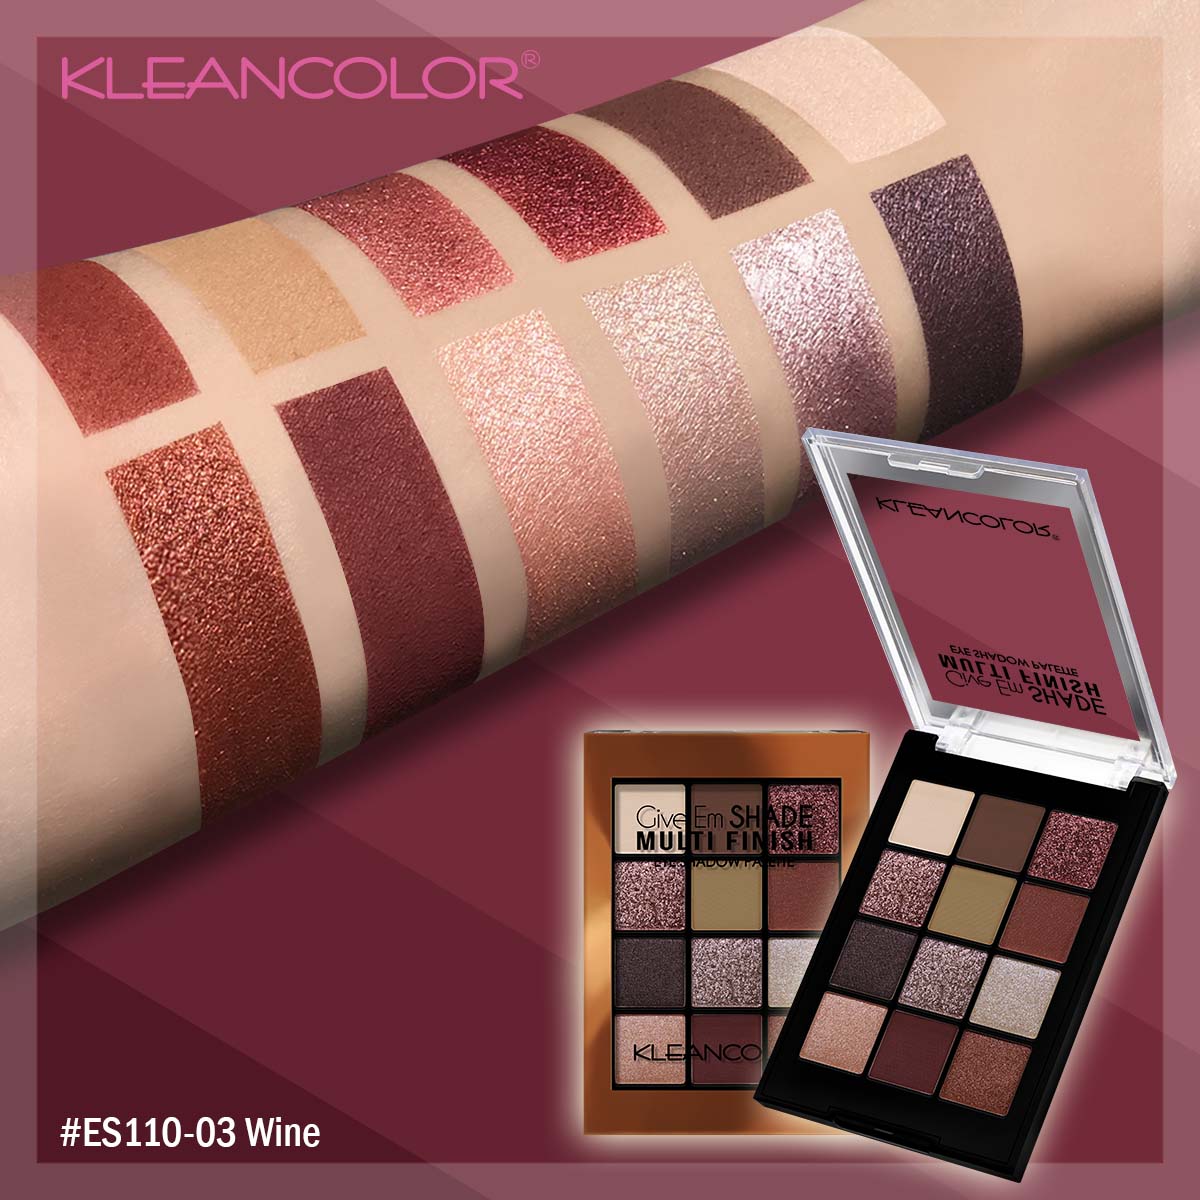 Kleancolor give em shade multi finish eyeshadow palette